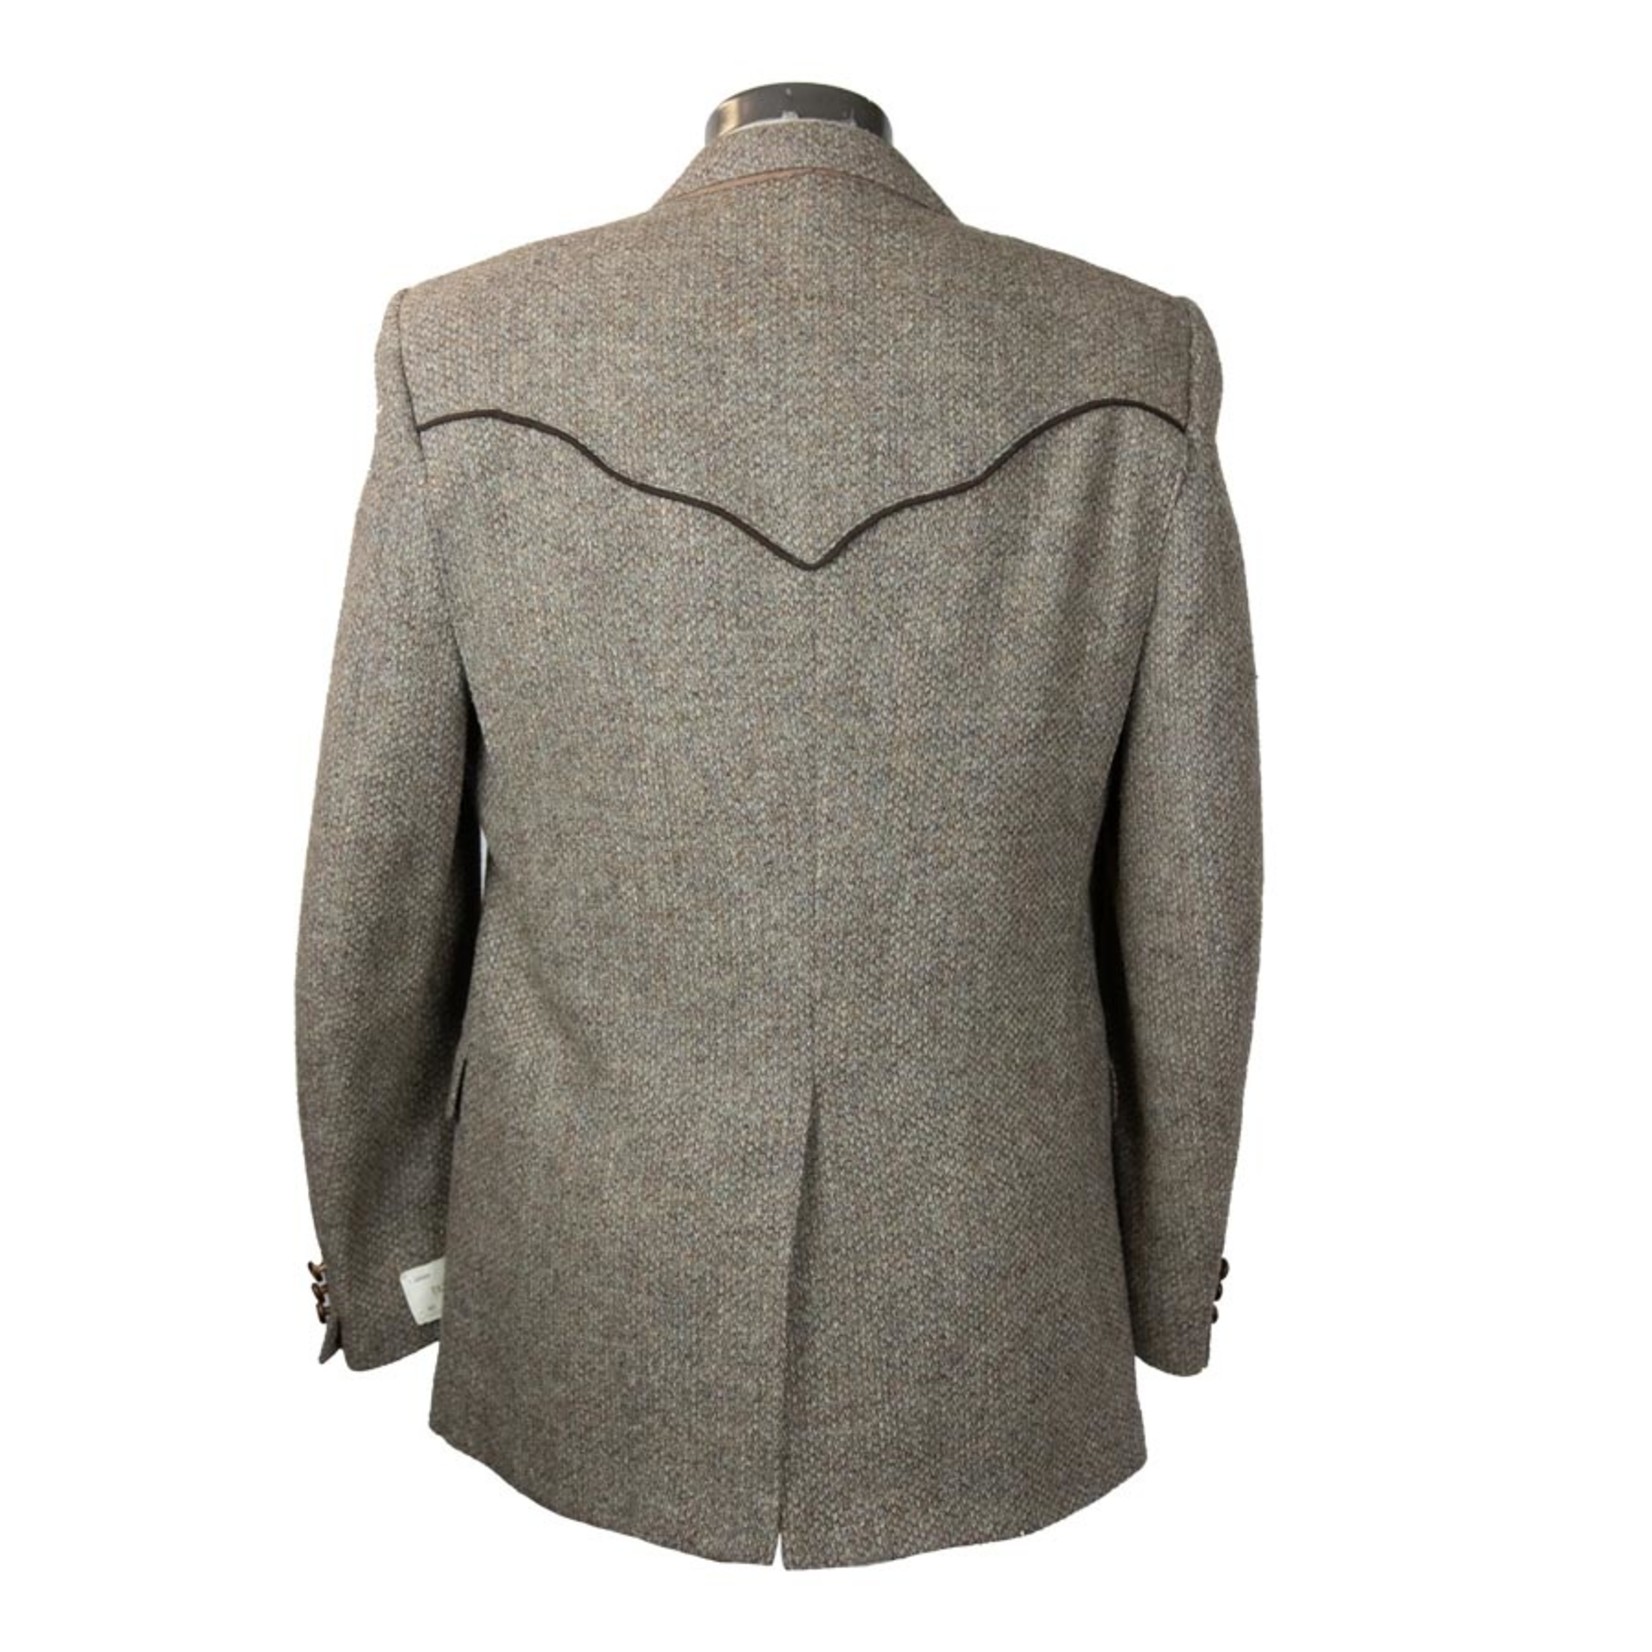 Flying L 100% Wool Vintage Suit Jacket - Size 40 - #34